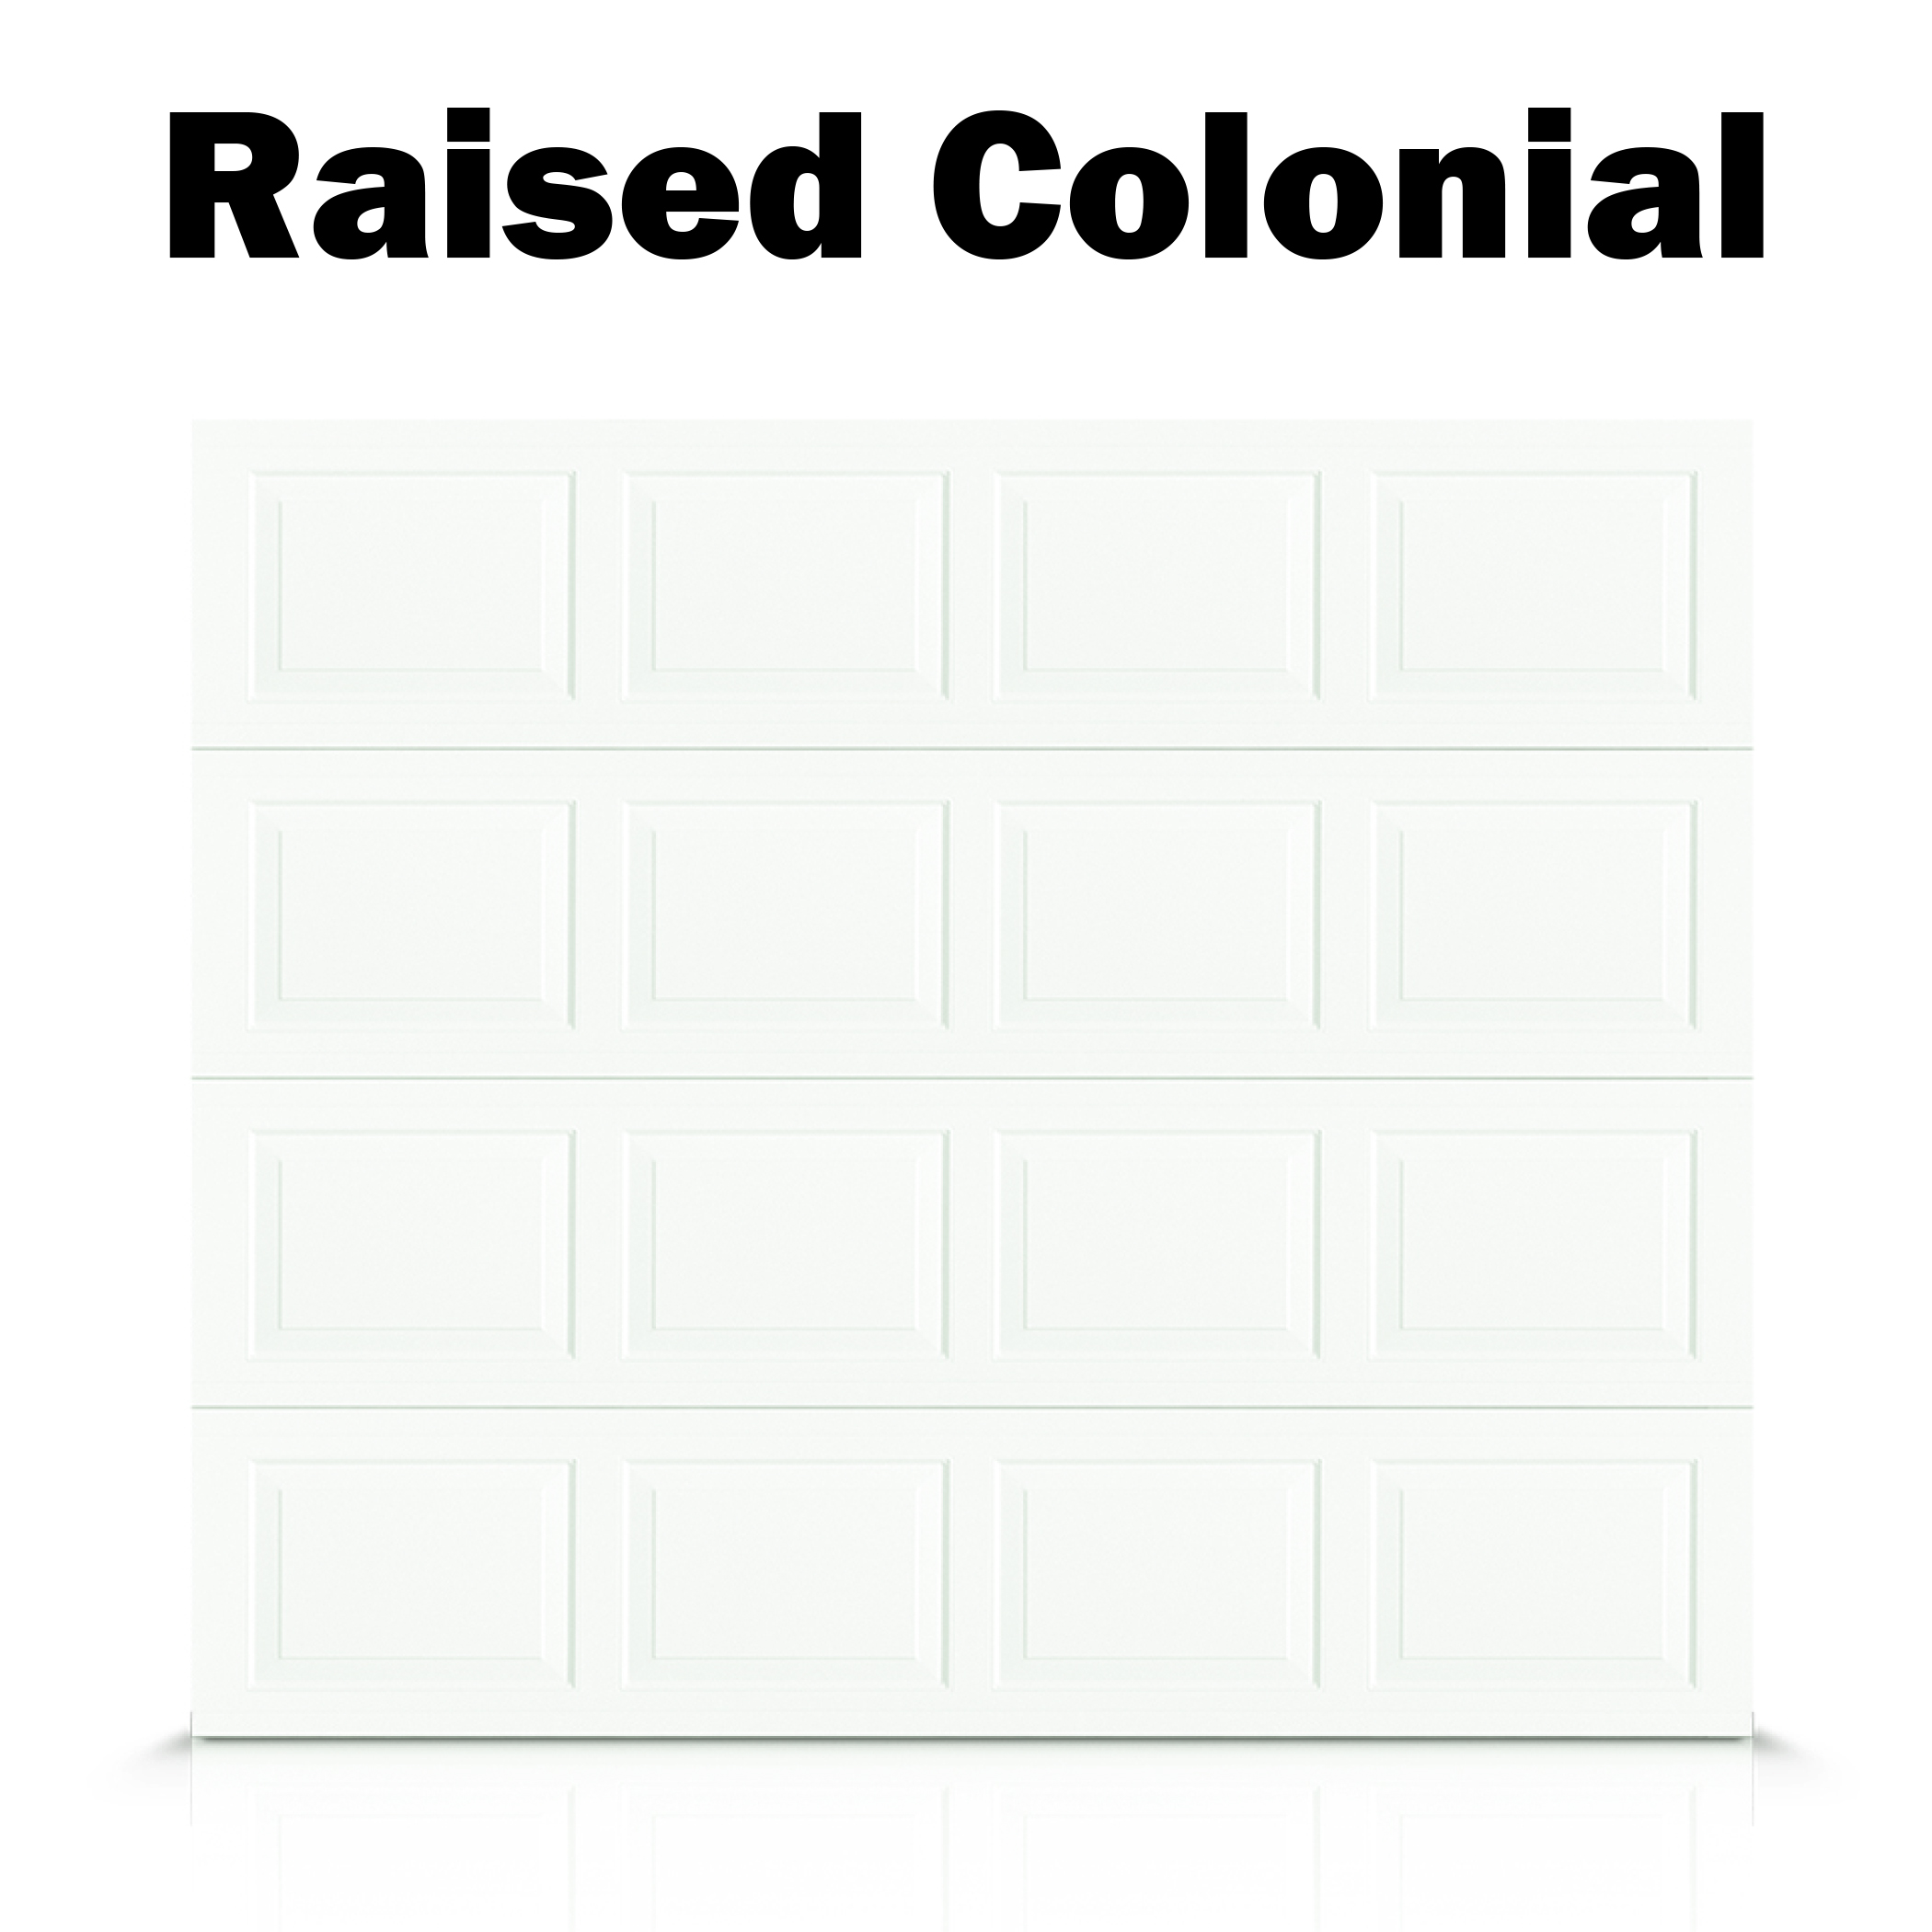 Raised Colonial - Premium.jpg